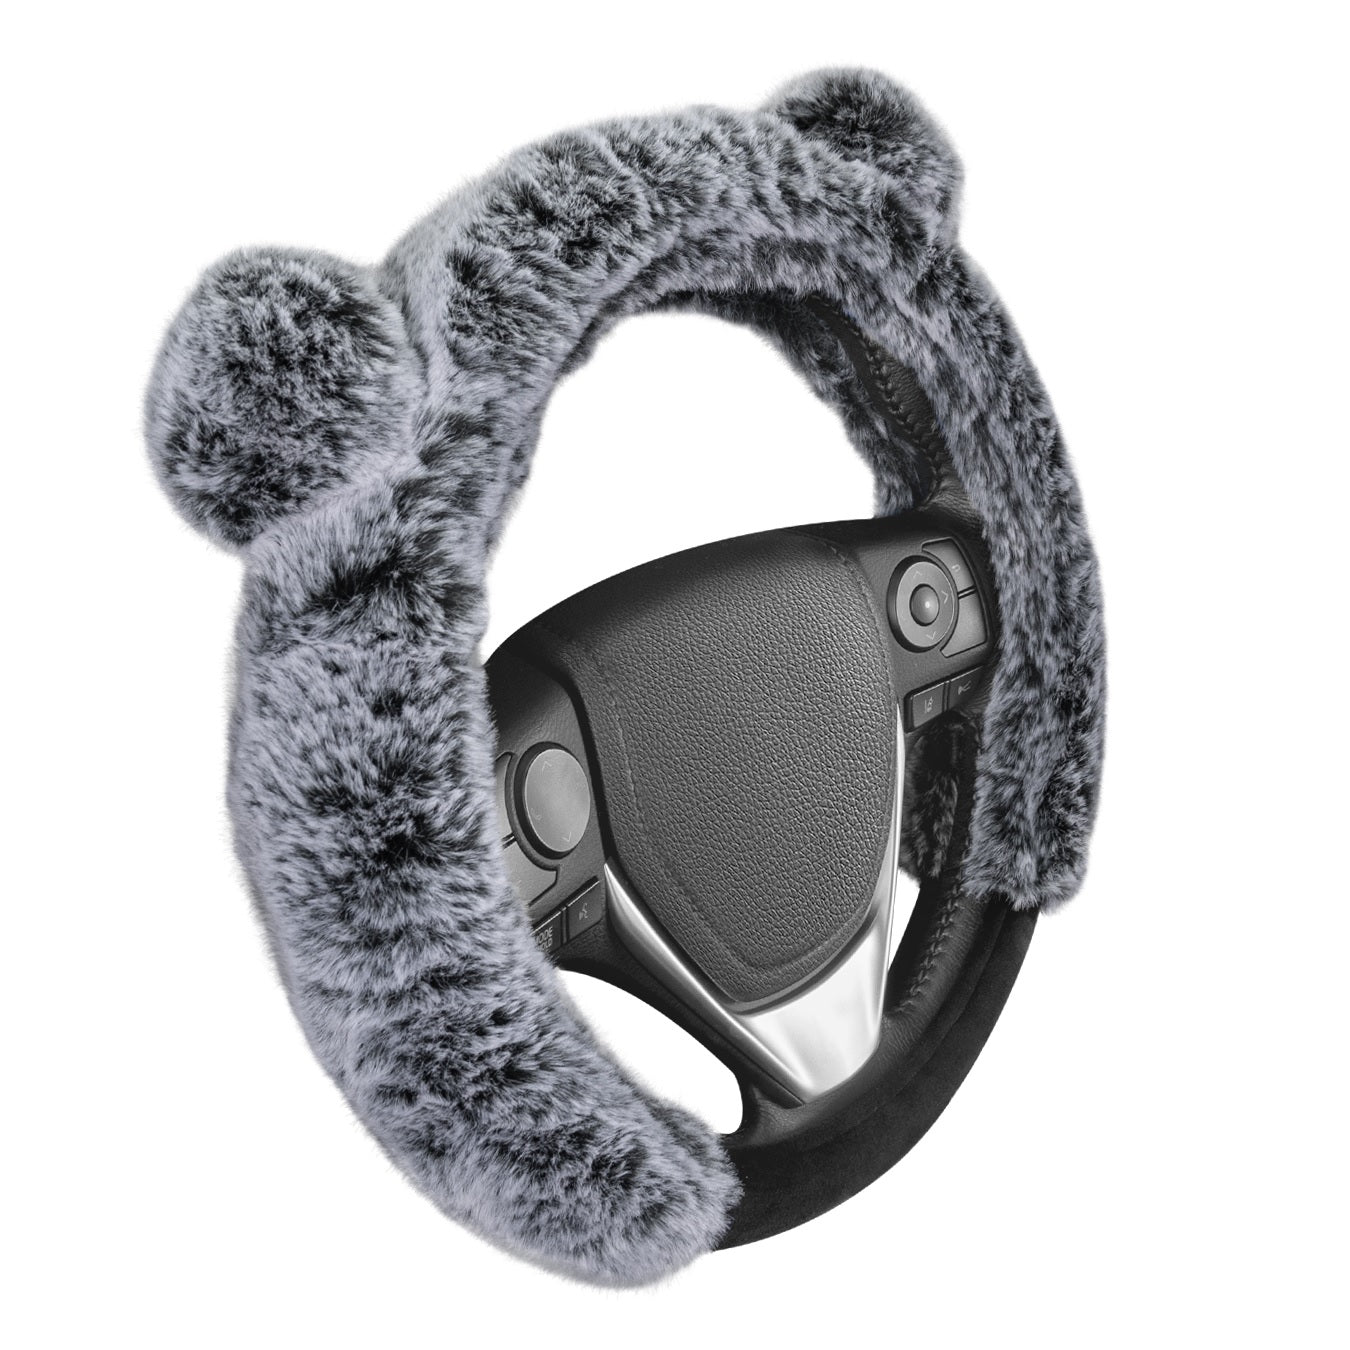 BDK Bear Fur Plush Steering Wheel Cover - Cute Faux Wool Protector for Women Girls Fits Wheels 14.5 - 15 inch Gray - with Ears